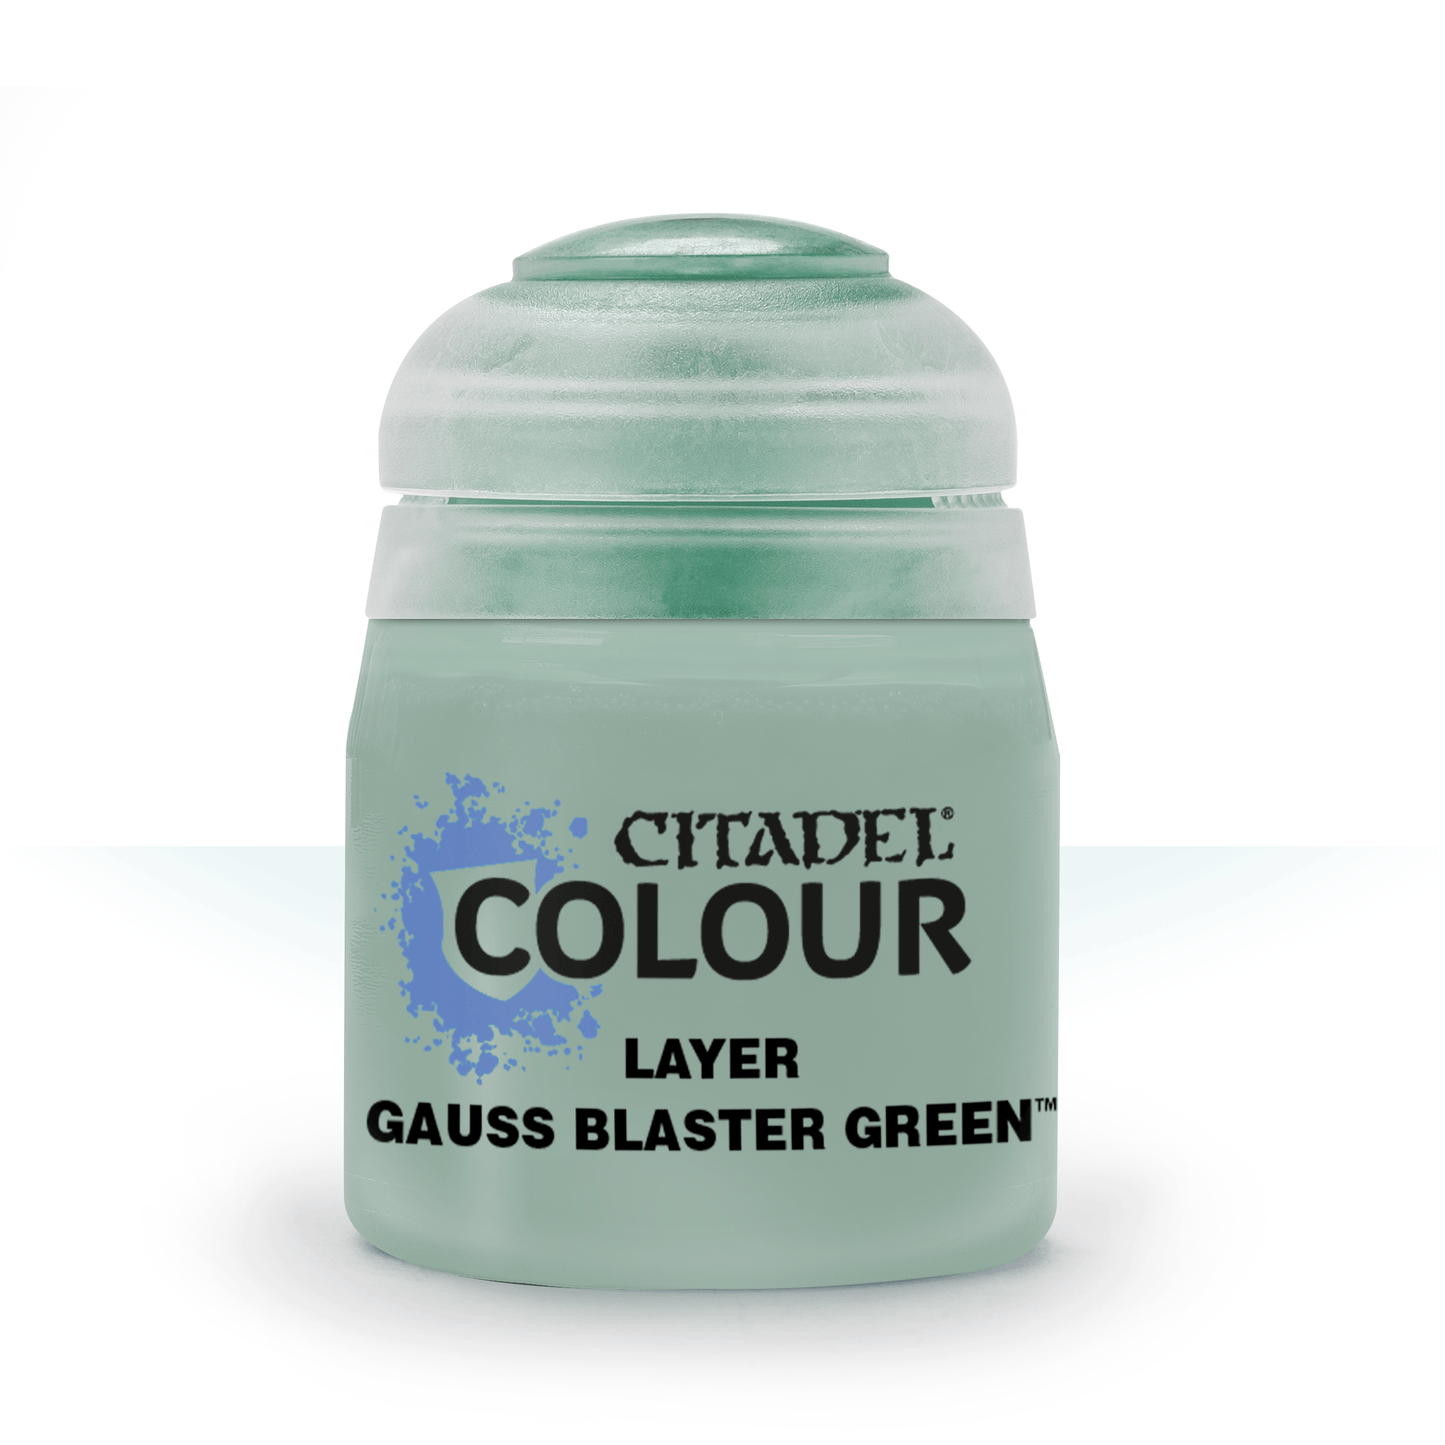 Citadel Colour - Gauss Blaster Green Layer Paint